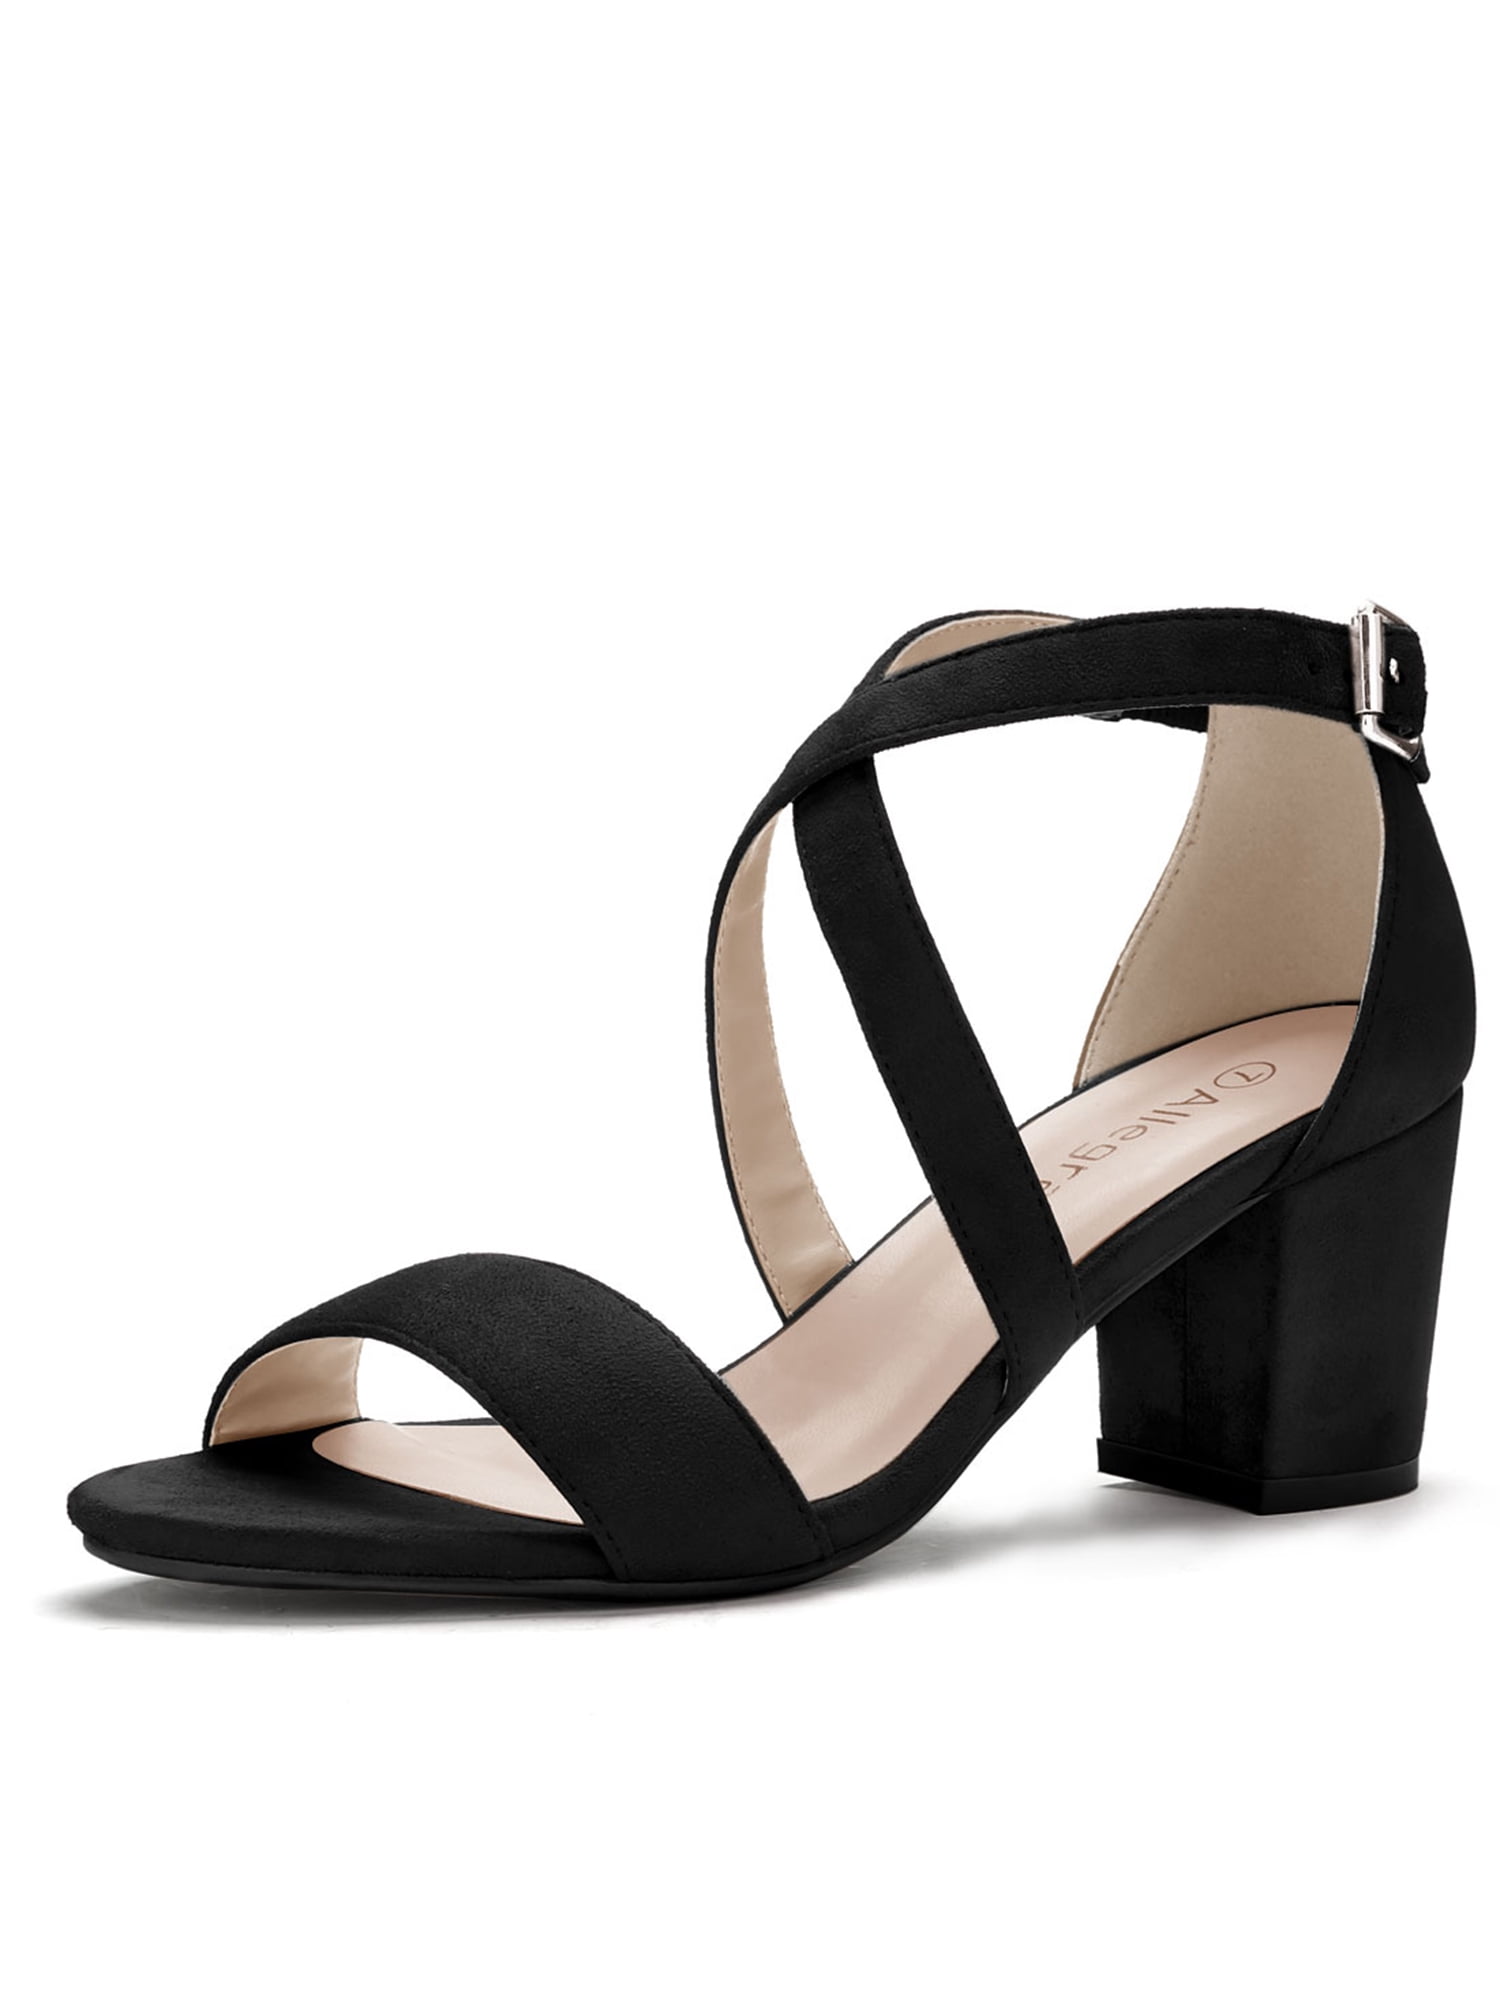 black ankle strap heels size 5